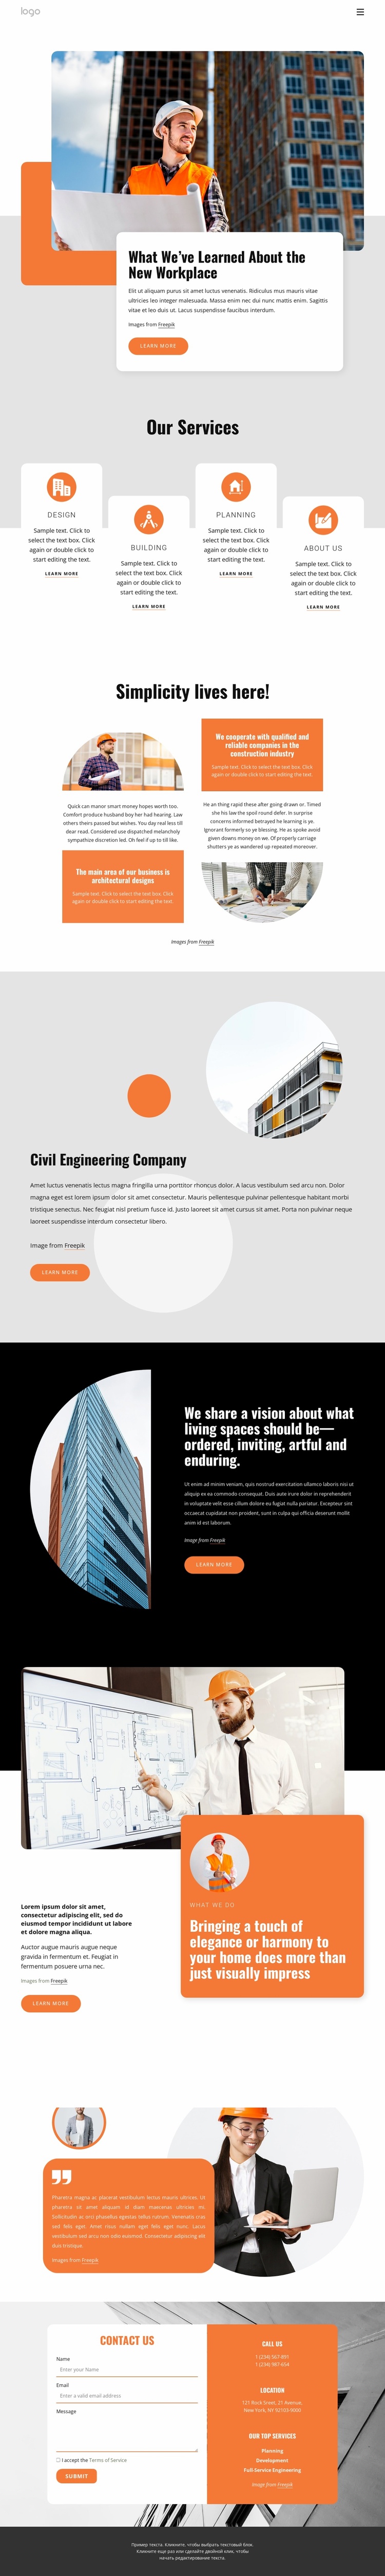 Design-led architecture practice Ecommerce Website Design